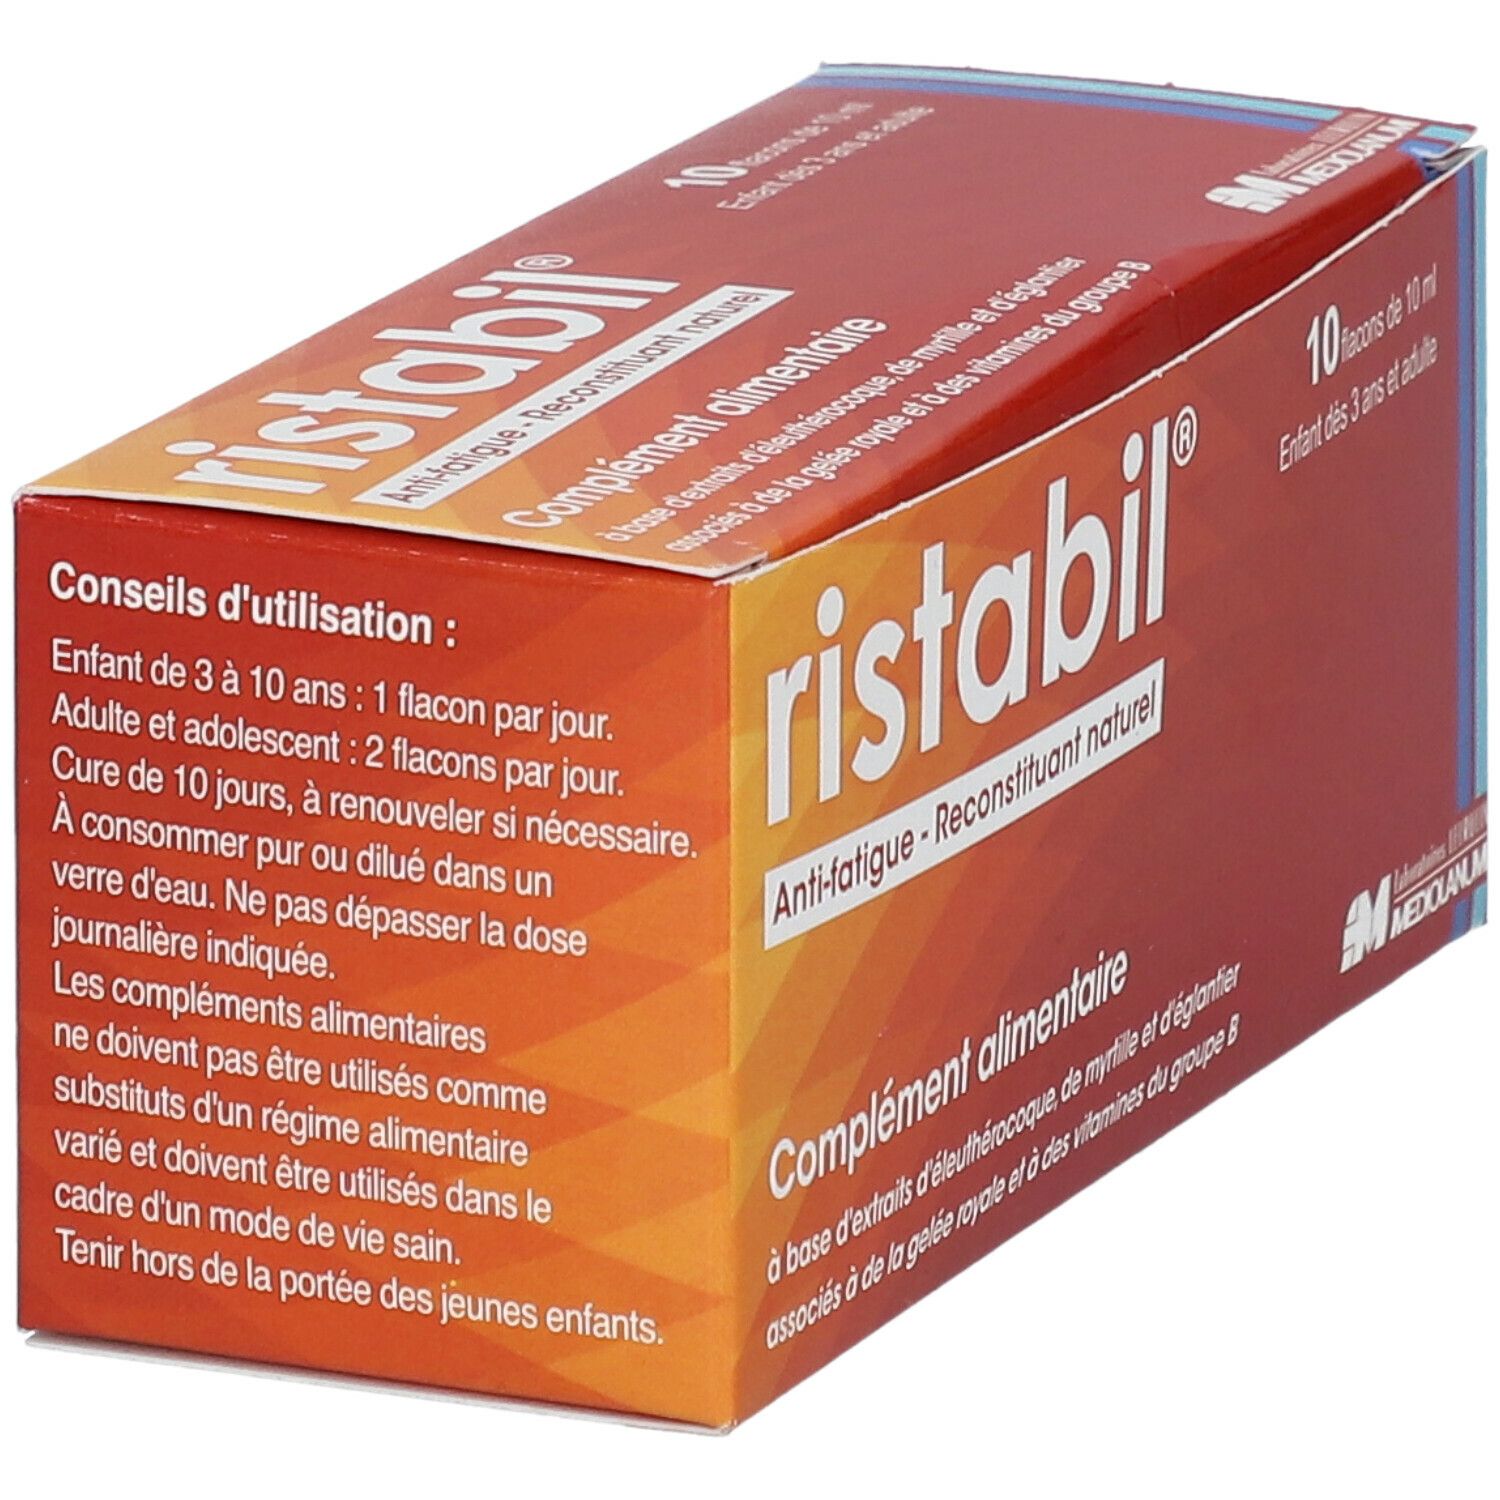 RISTABIL Anti fatigue 10 flacons de 10ml - Parapharmacie Prado Mermoz